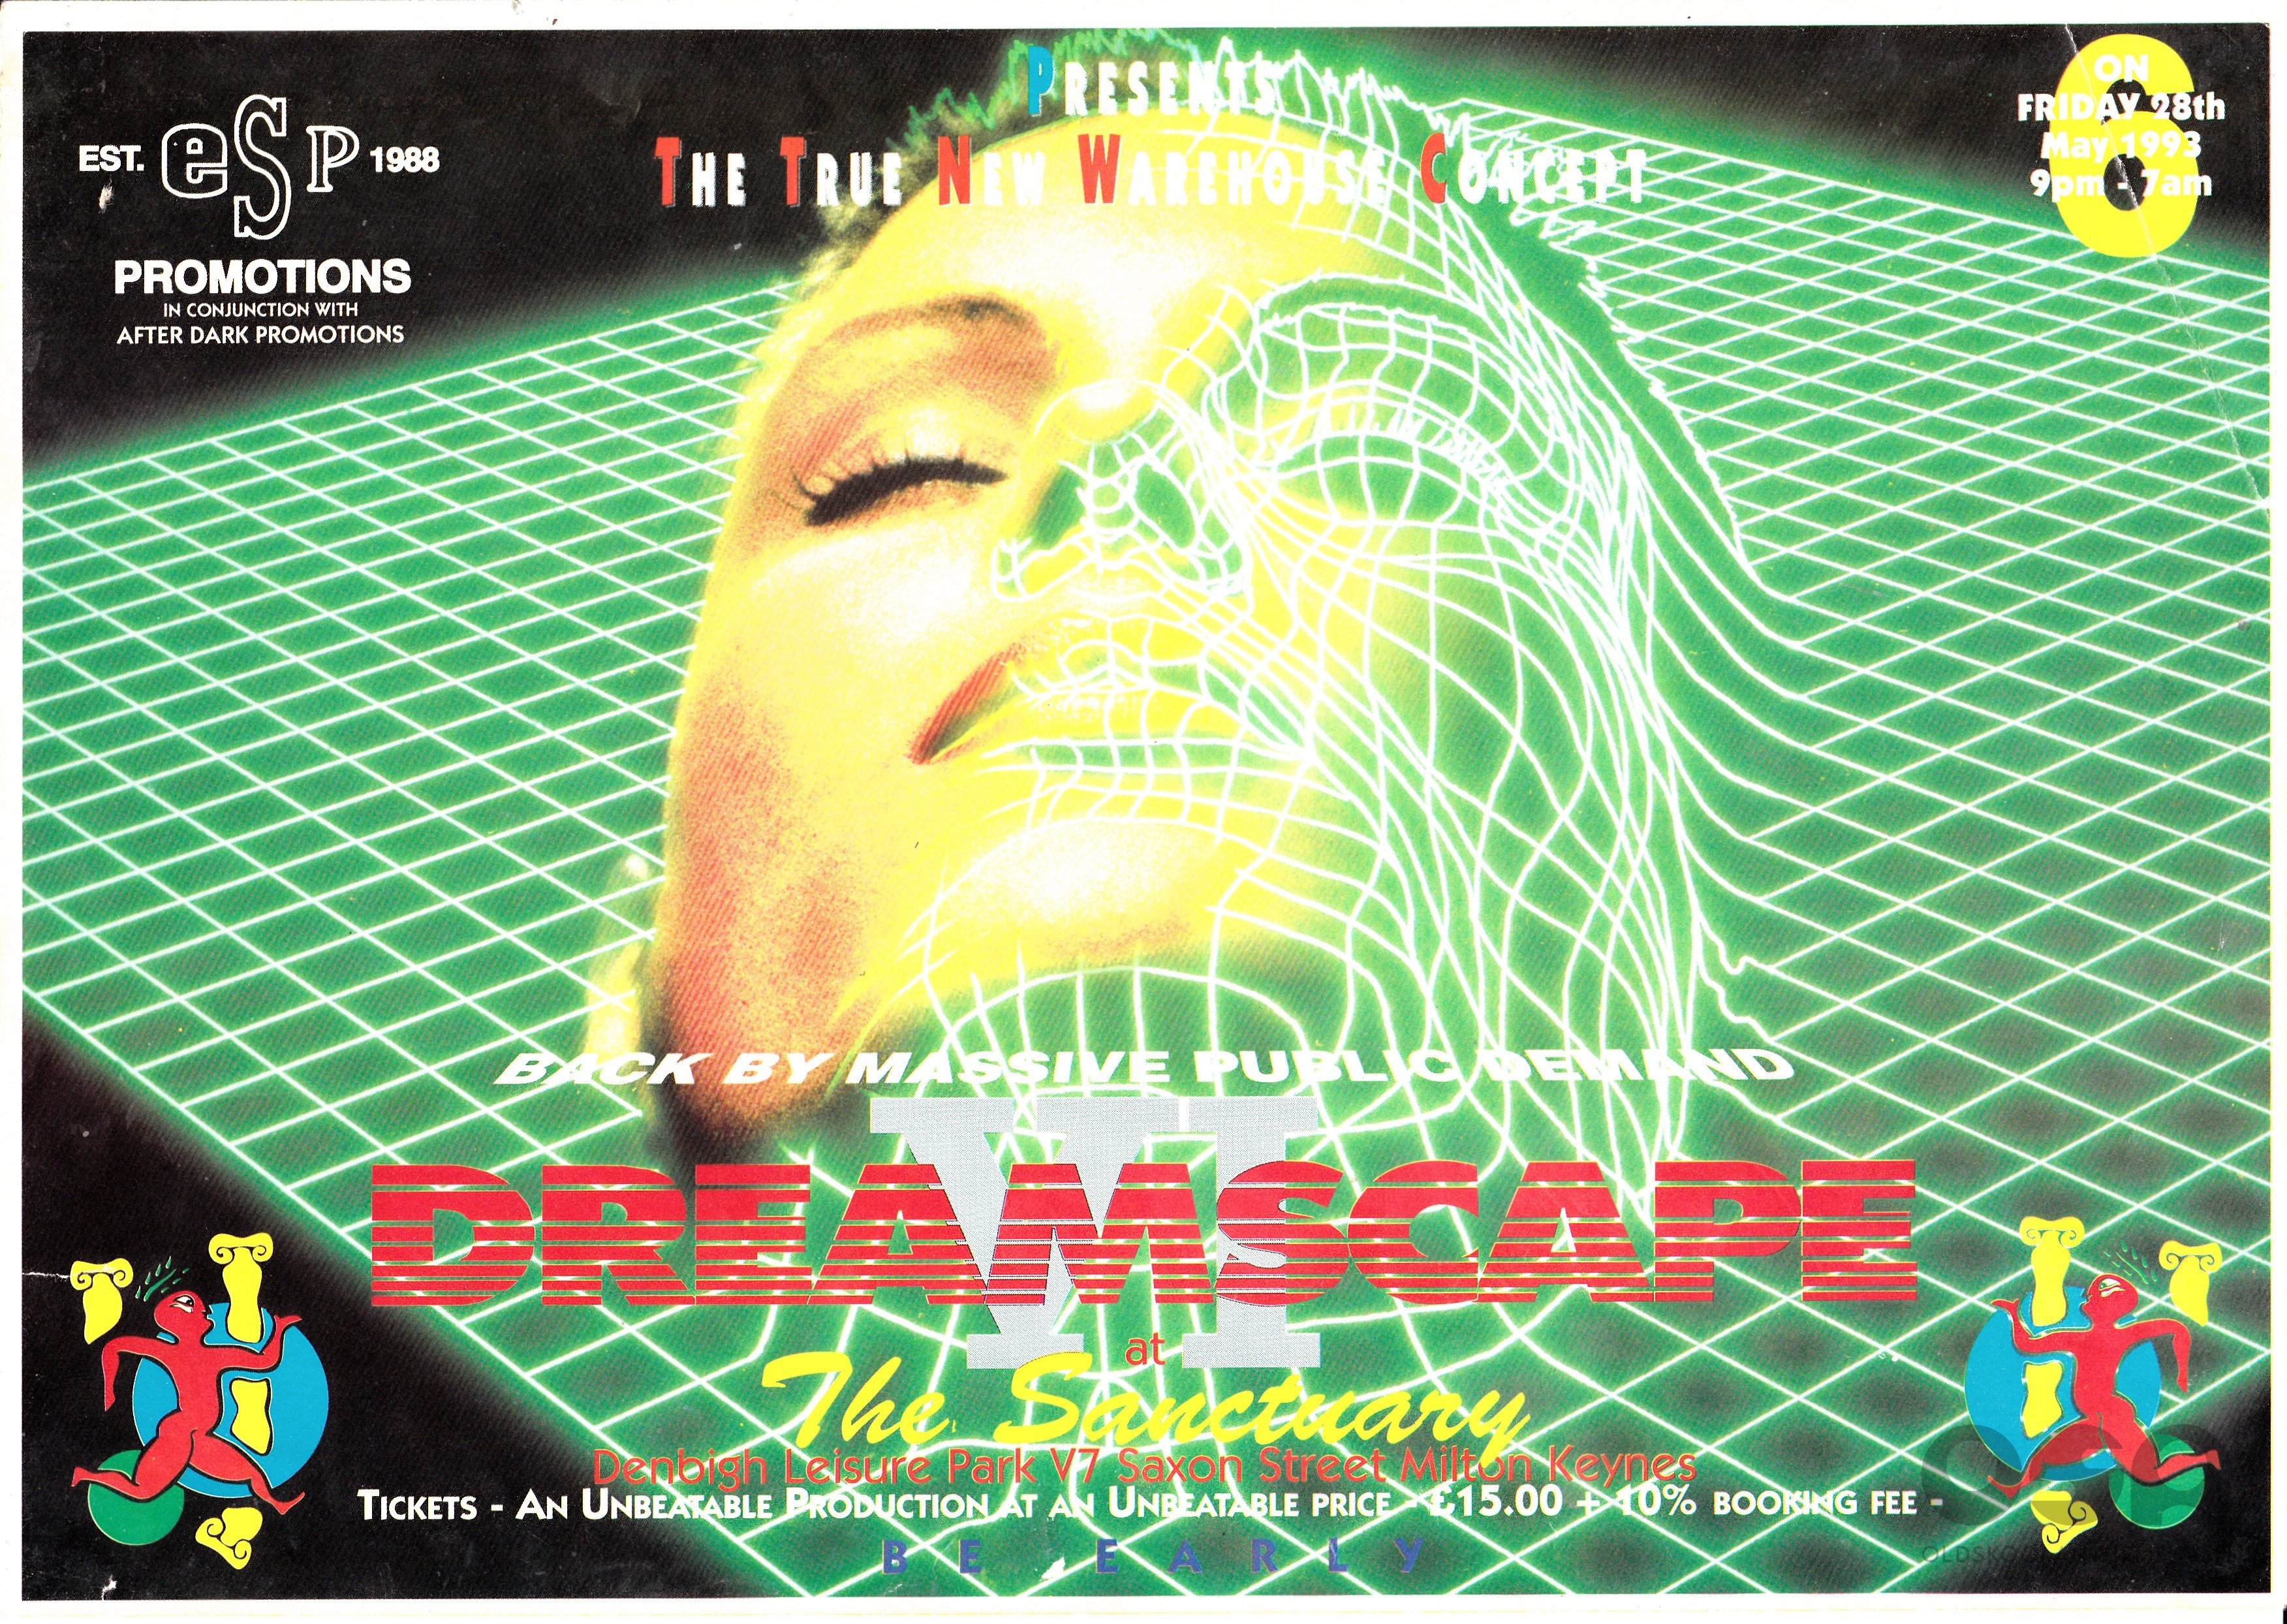 dreamscape 11a.jpg